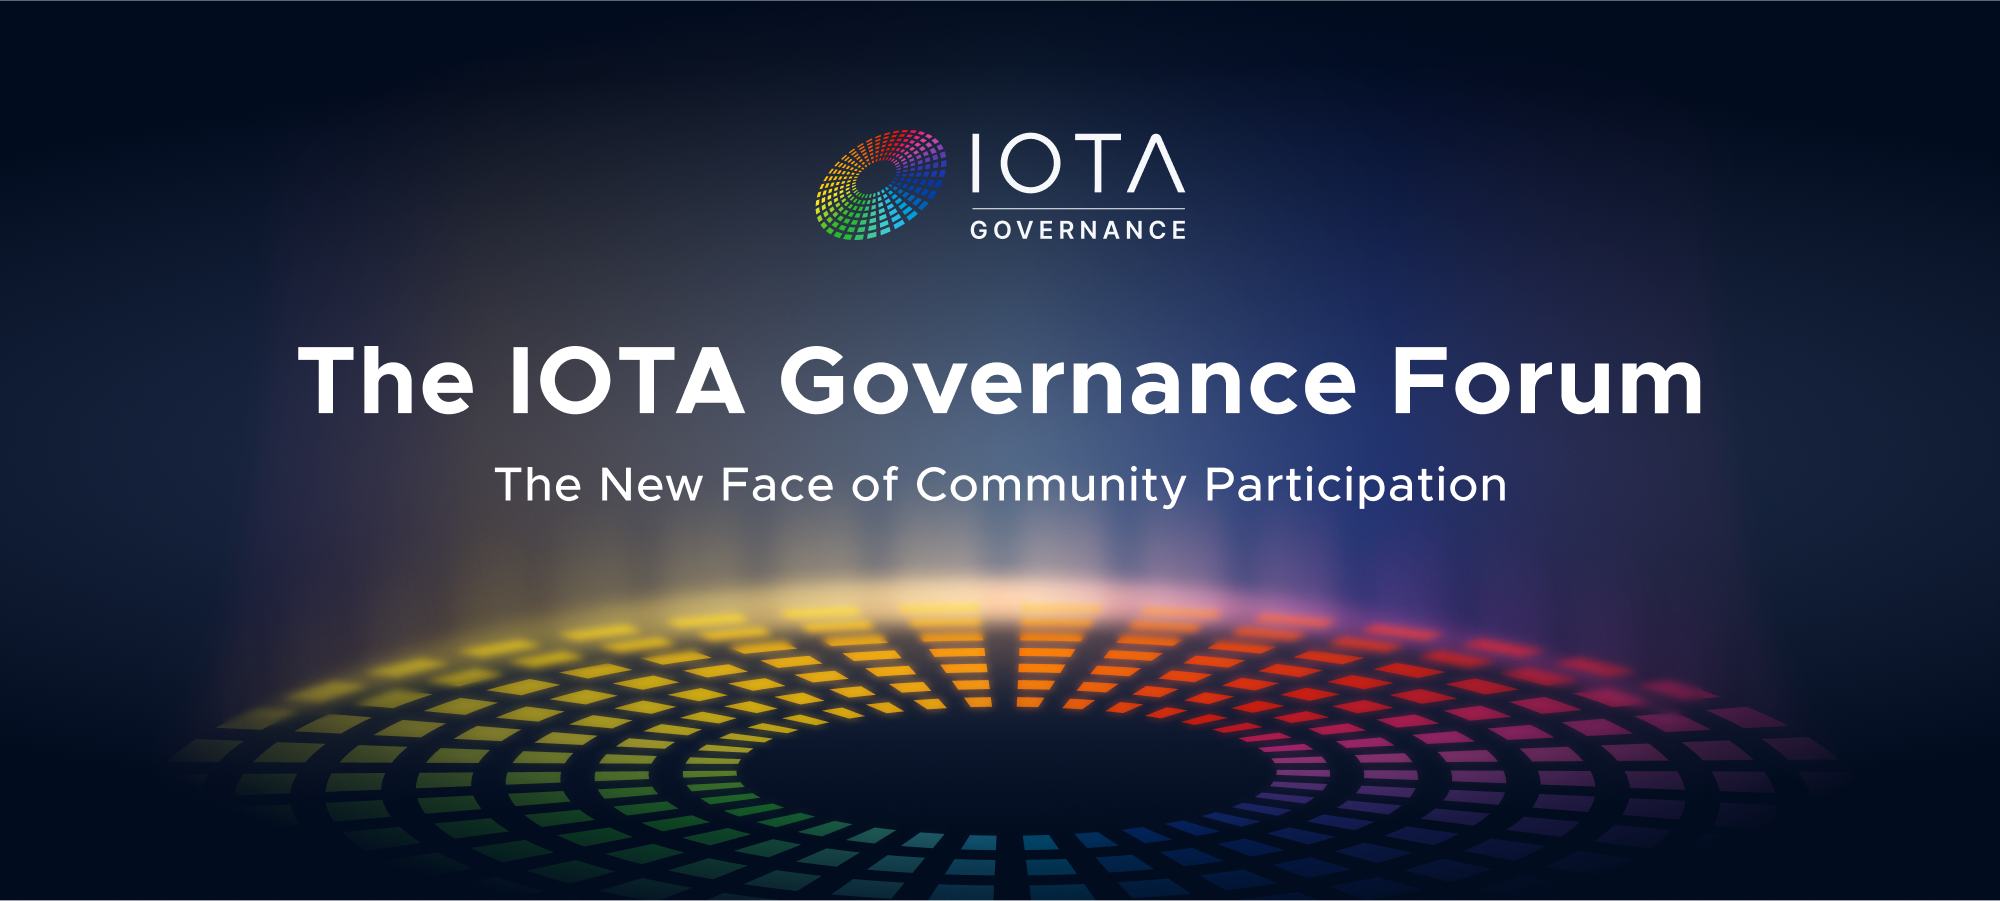 The IOTA Governance Forum